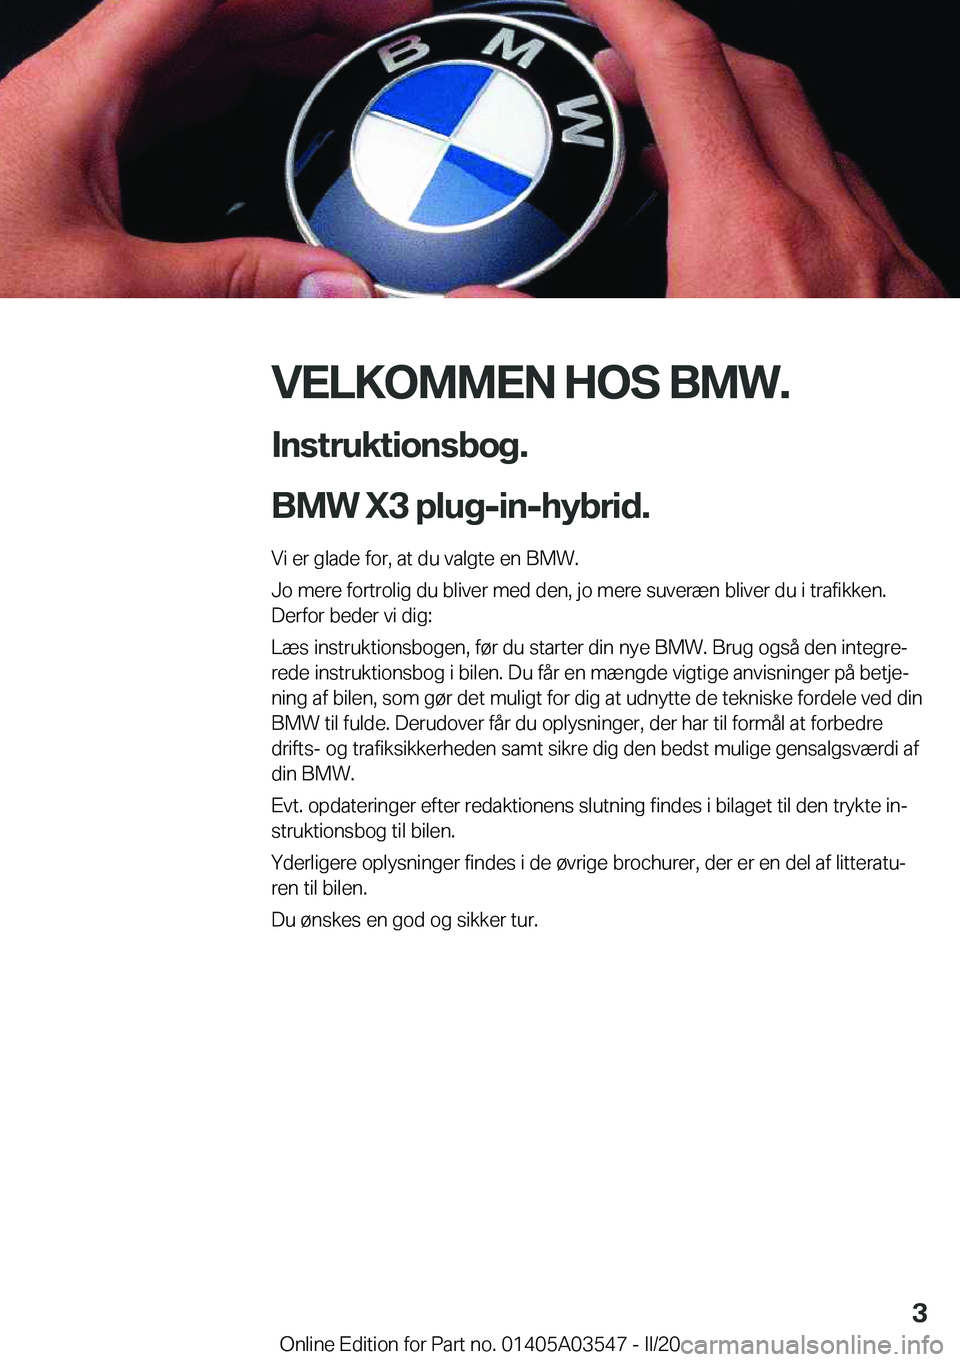 BMW X3 PLUG IN HYBRID 2020  InstruktionsbØger (in Danish) �V�E�L�K�O�M�M�E�N��H�O�S��B�M�W�.
�I�n�s�t�r�u�k�t�i�o�n�s�b�o�g�.
�B�M�W��X�3��p�l�u�g�-�i�n�-�h�y�b�r�i�d�. �V�i��e�r��g�l�a�d�e��f�o�r�,��a�t��d�u��v�a�l�g�t�e��e�n��B�M�W�.�J�o��m�e�